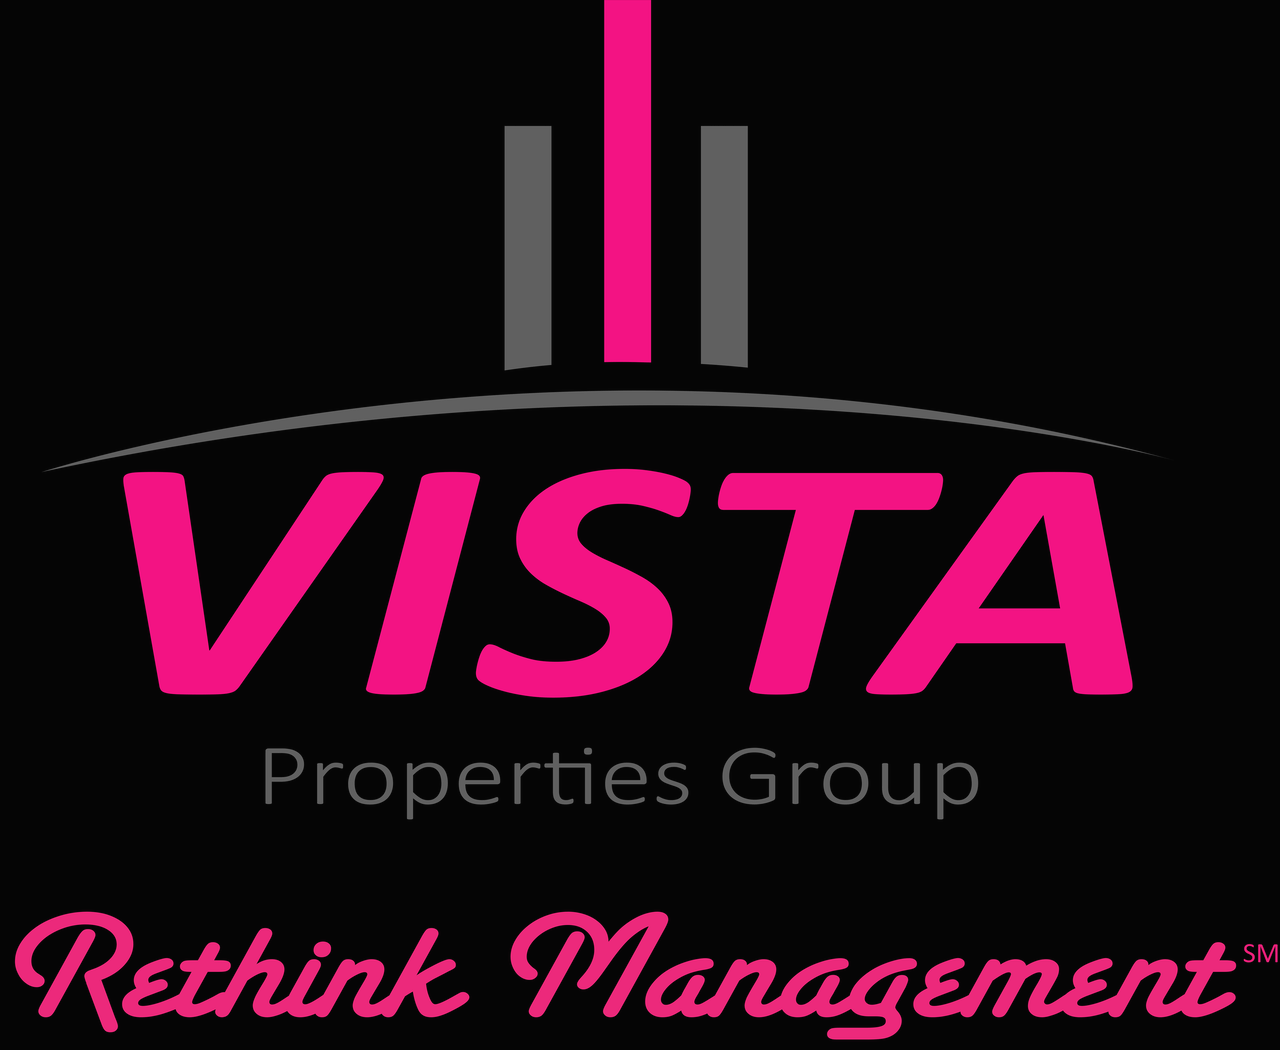 Vista Properties Group Logo